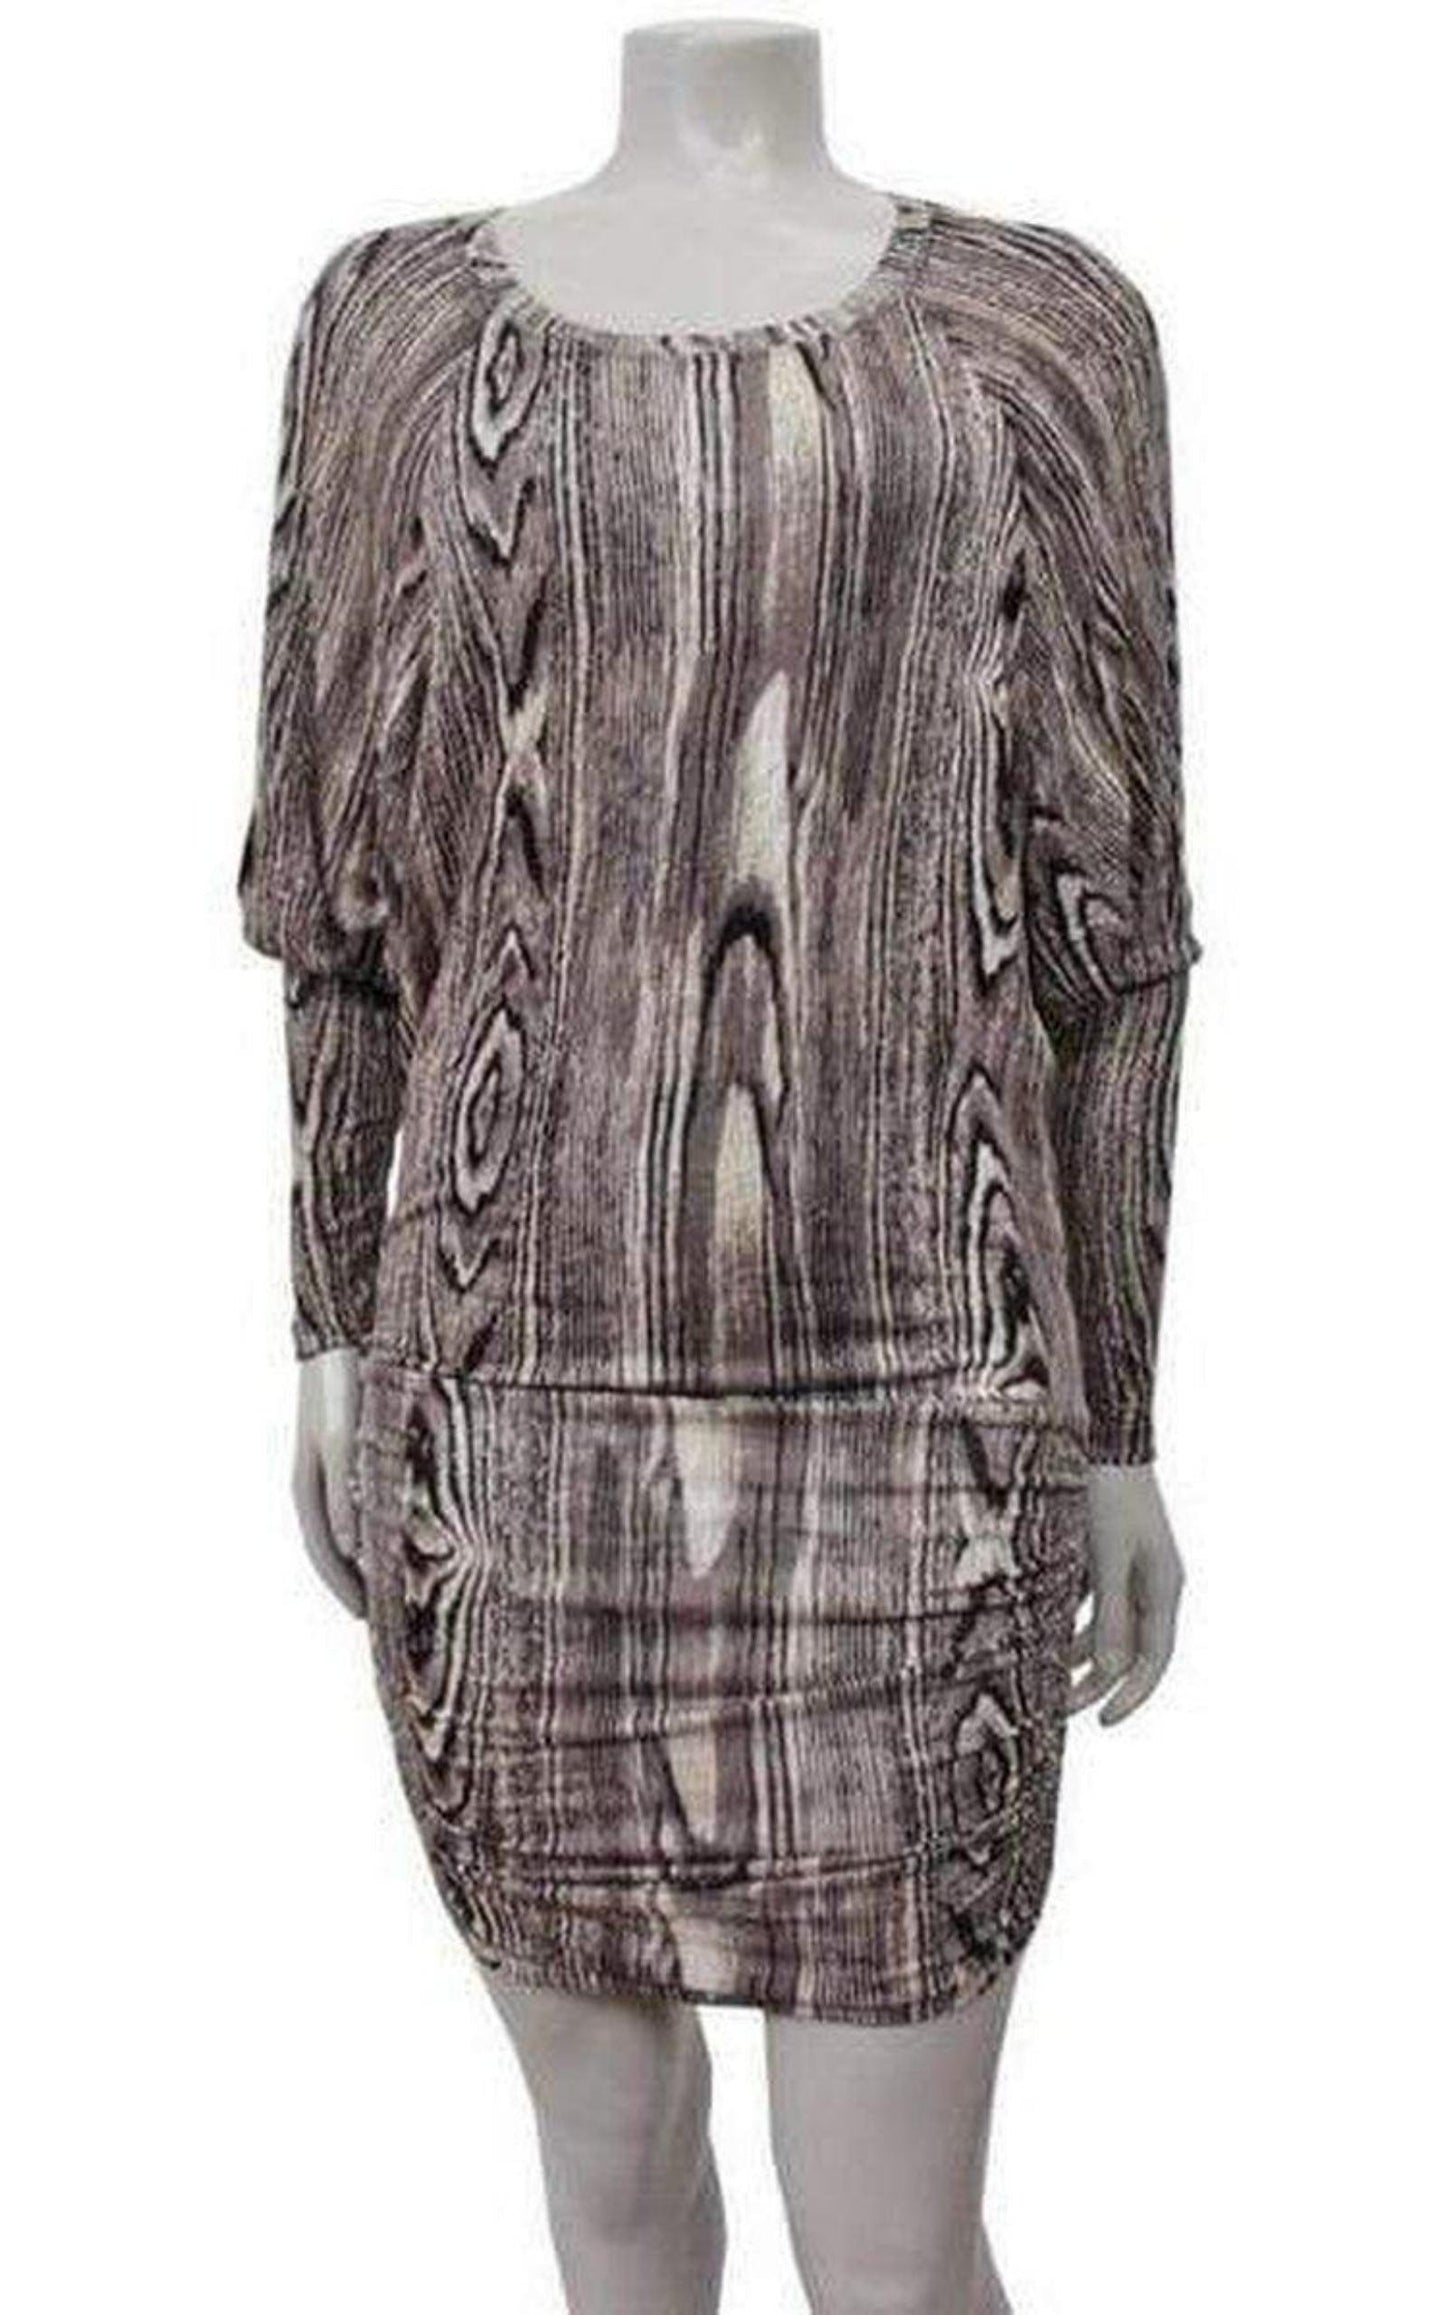 Machiato Olive Knit Dress